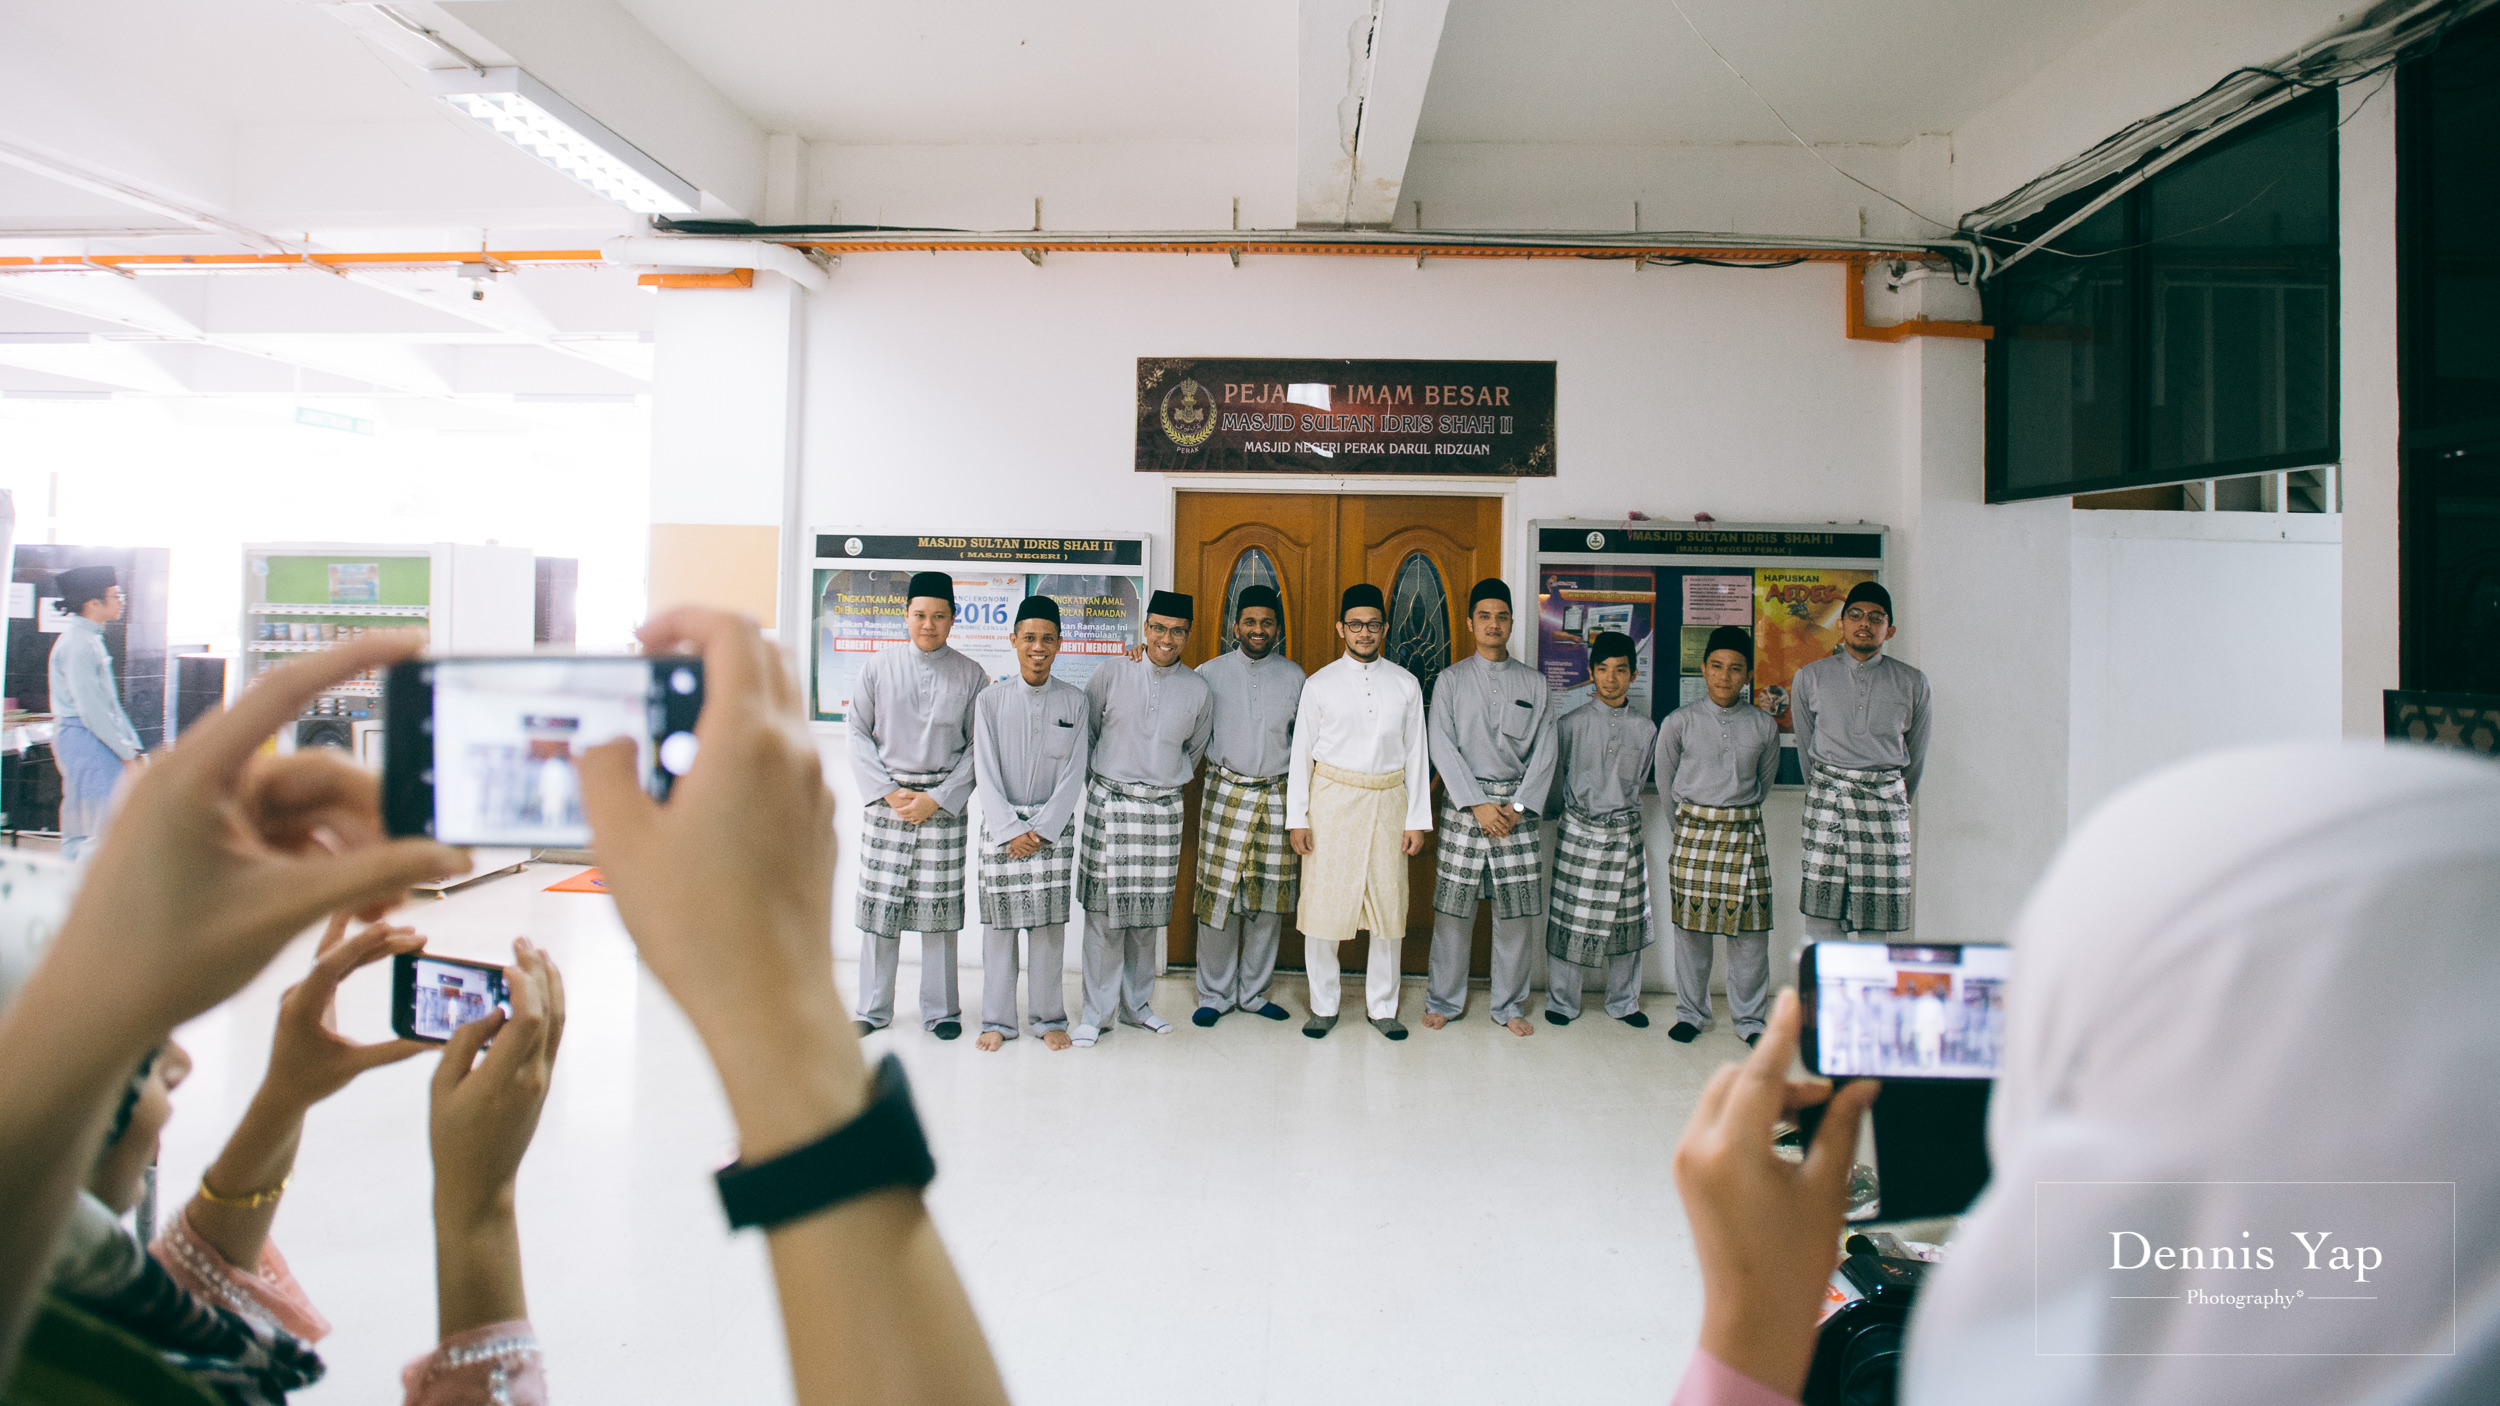 zarif hanalili malay wedding ceremony dennis yap photography-11.jpg